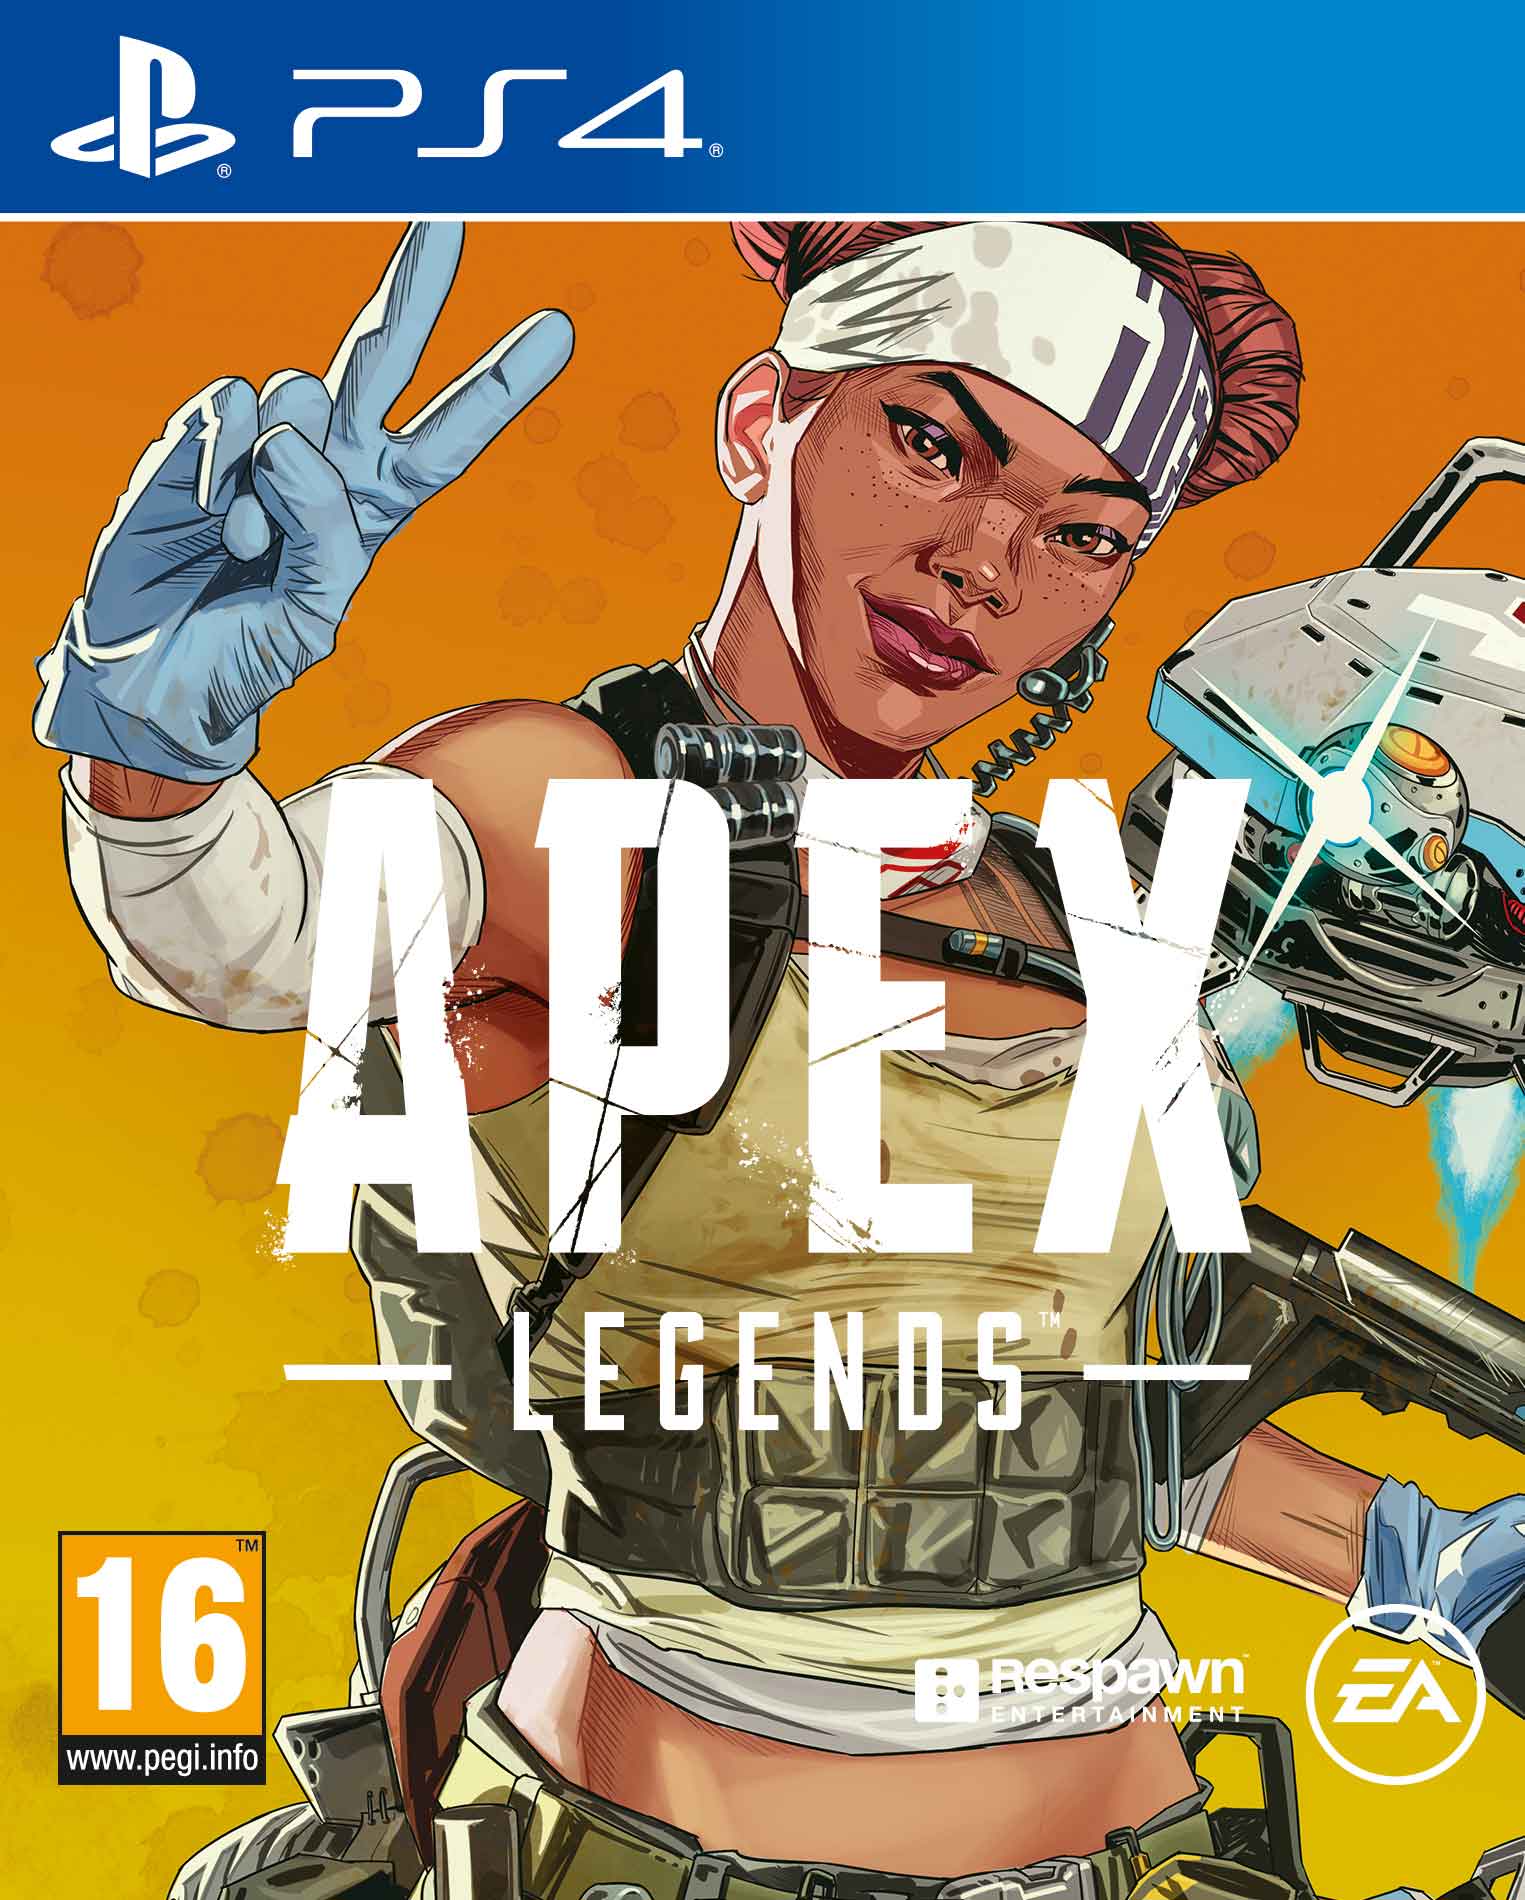 Apex Legends Lifeline Edition